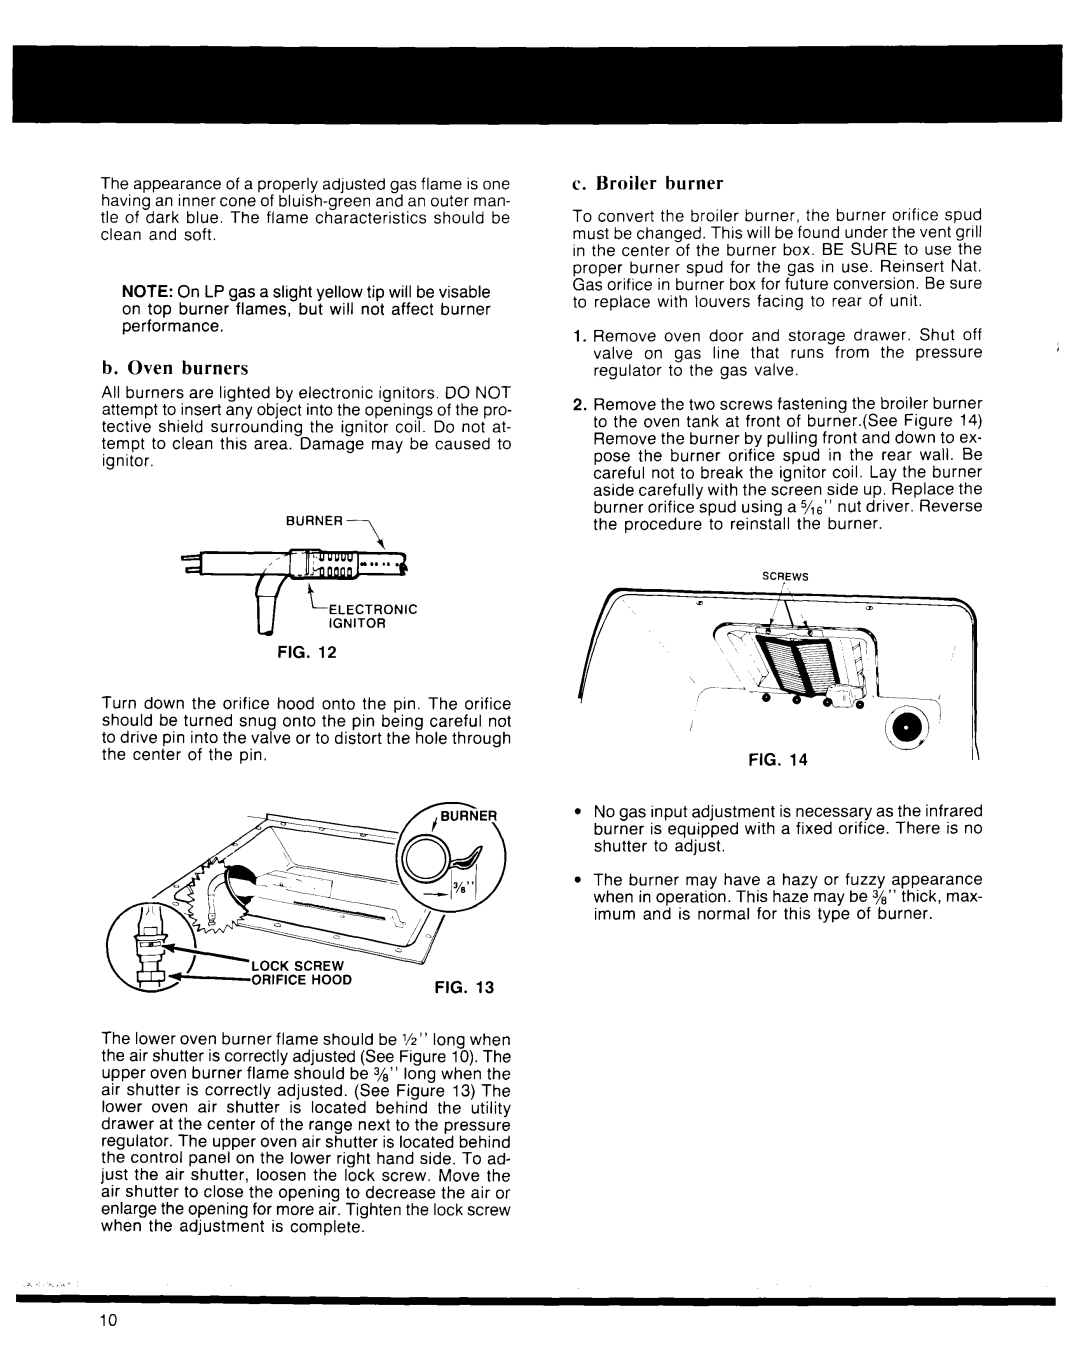 Whirlpool Microwave Oven manual b. Oven burners, c. Broiler burner 